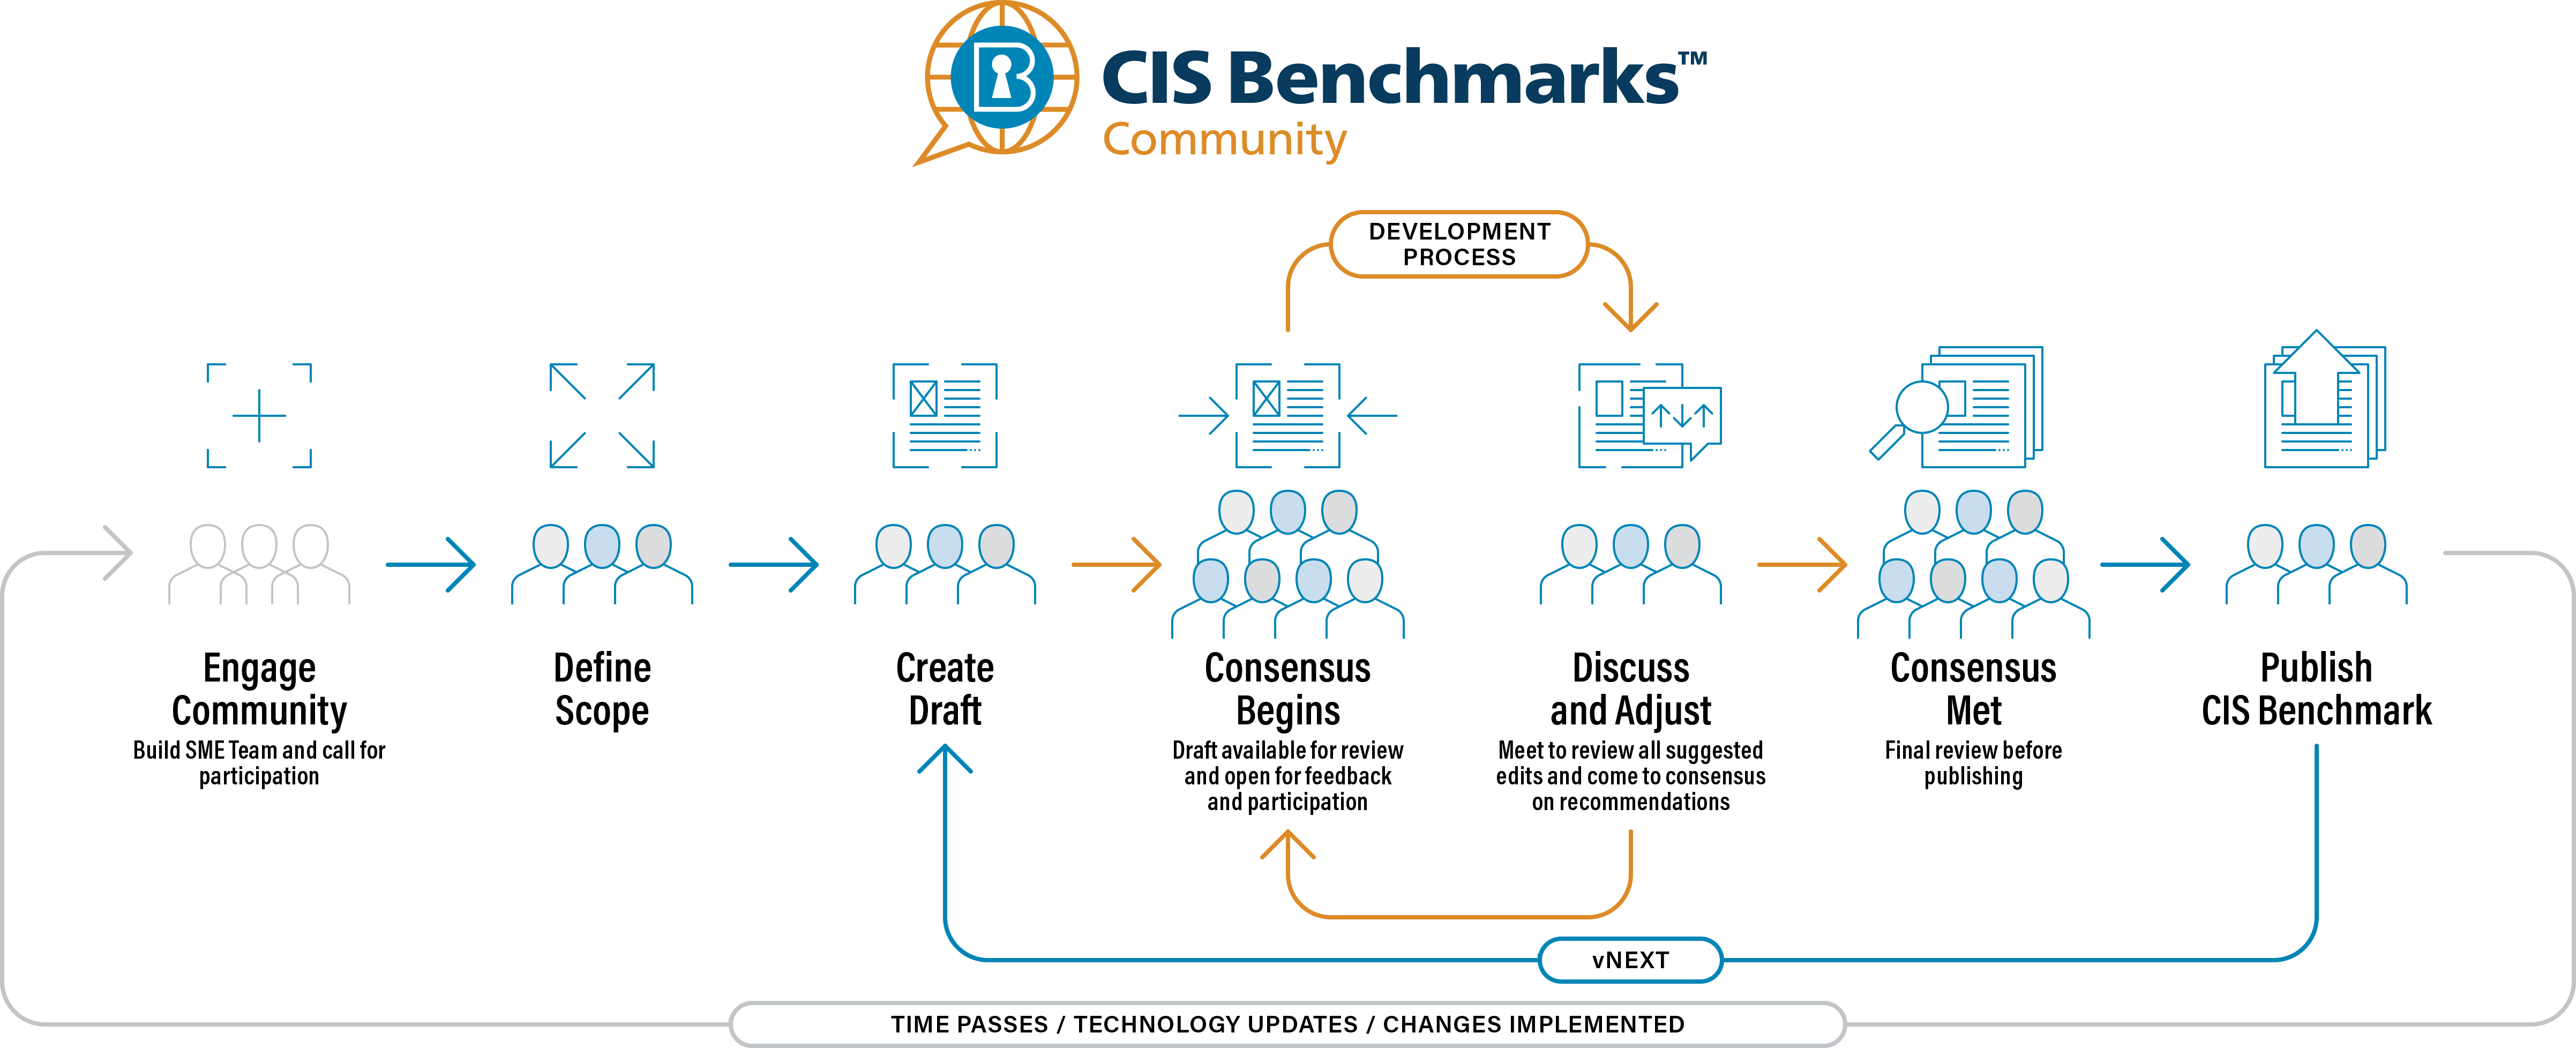 CIS Benchmarks community process